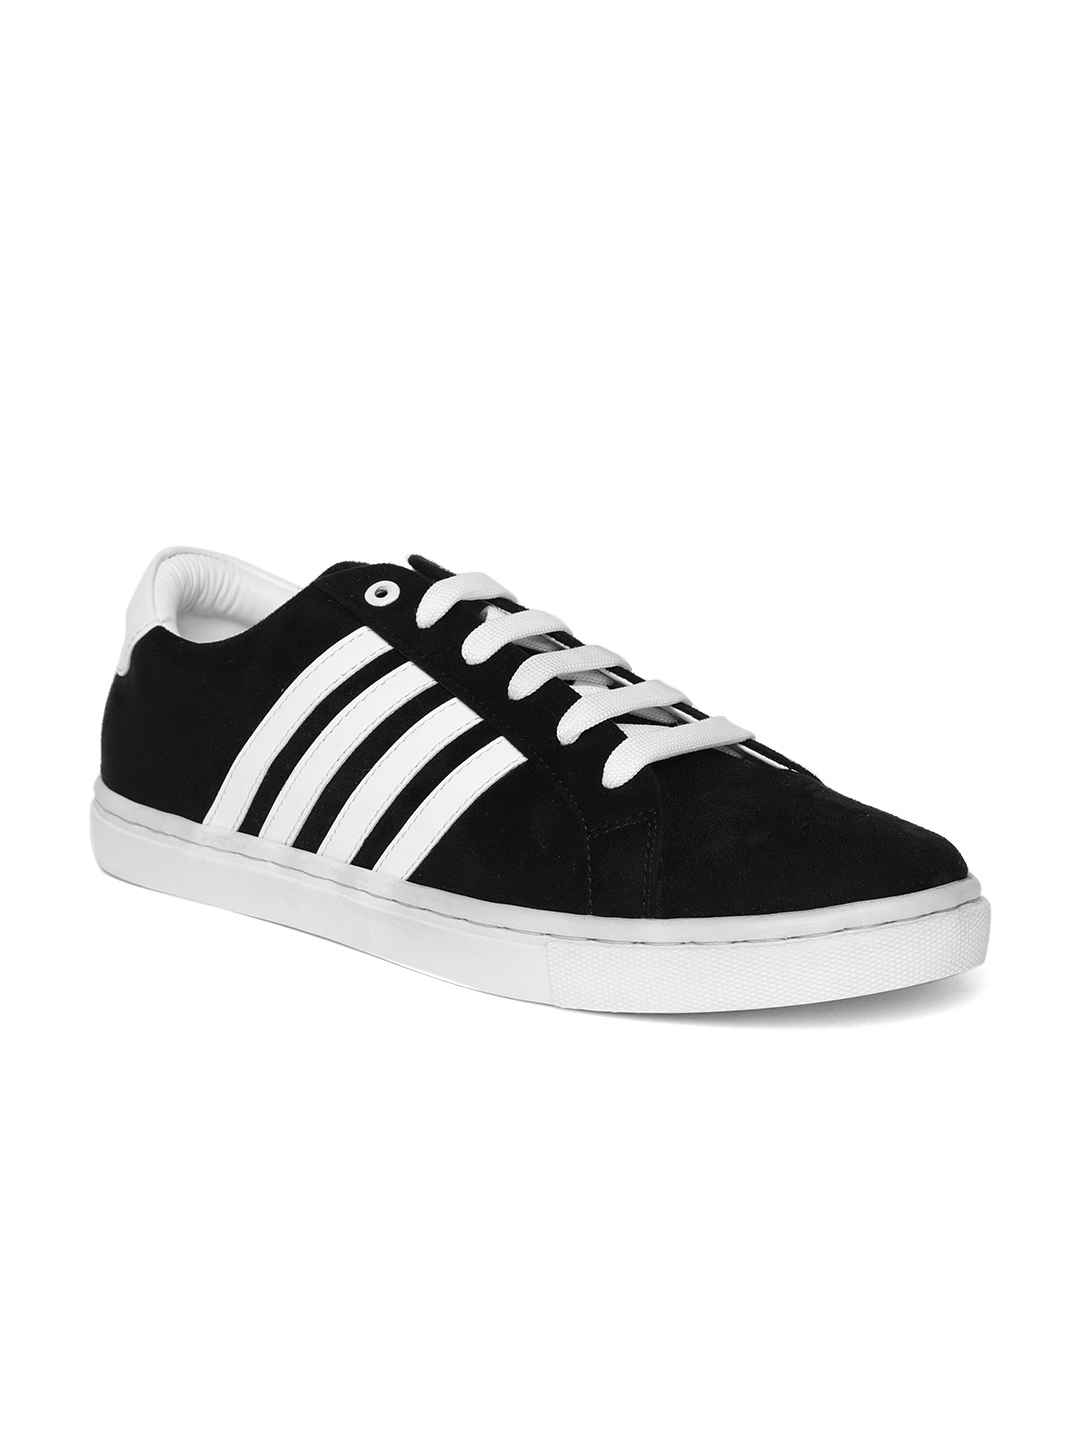 Buy Mocas Men Black & White Striped Sneakers - Casual Shoes for Men ...